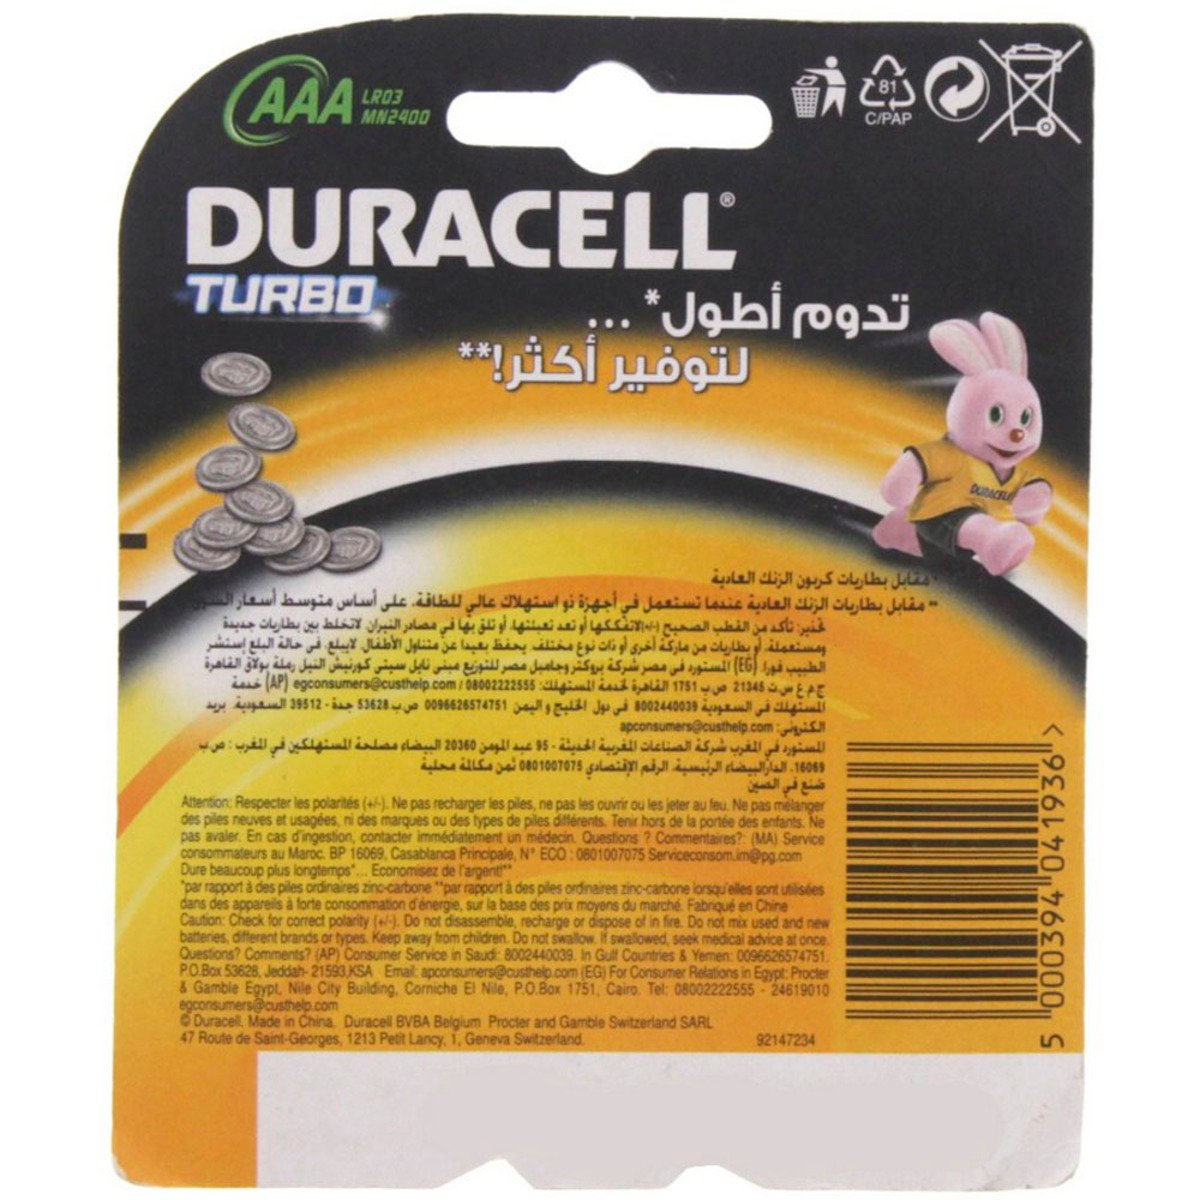 Duracell Turbo AAA Battery